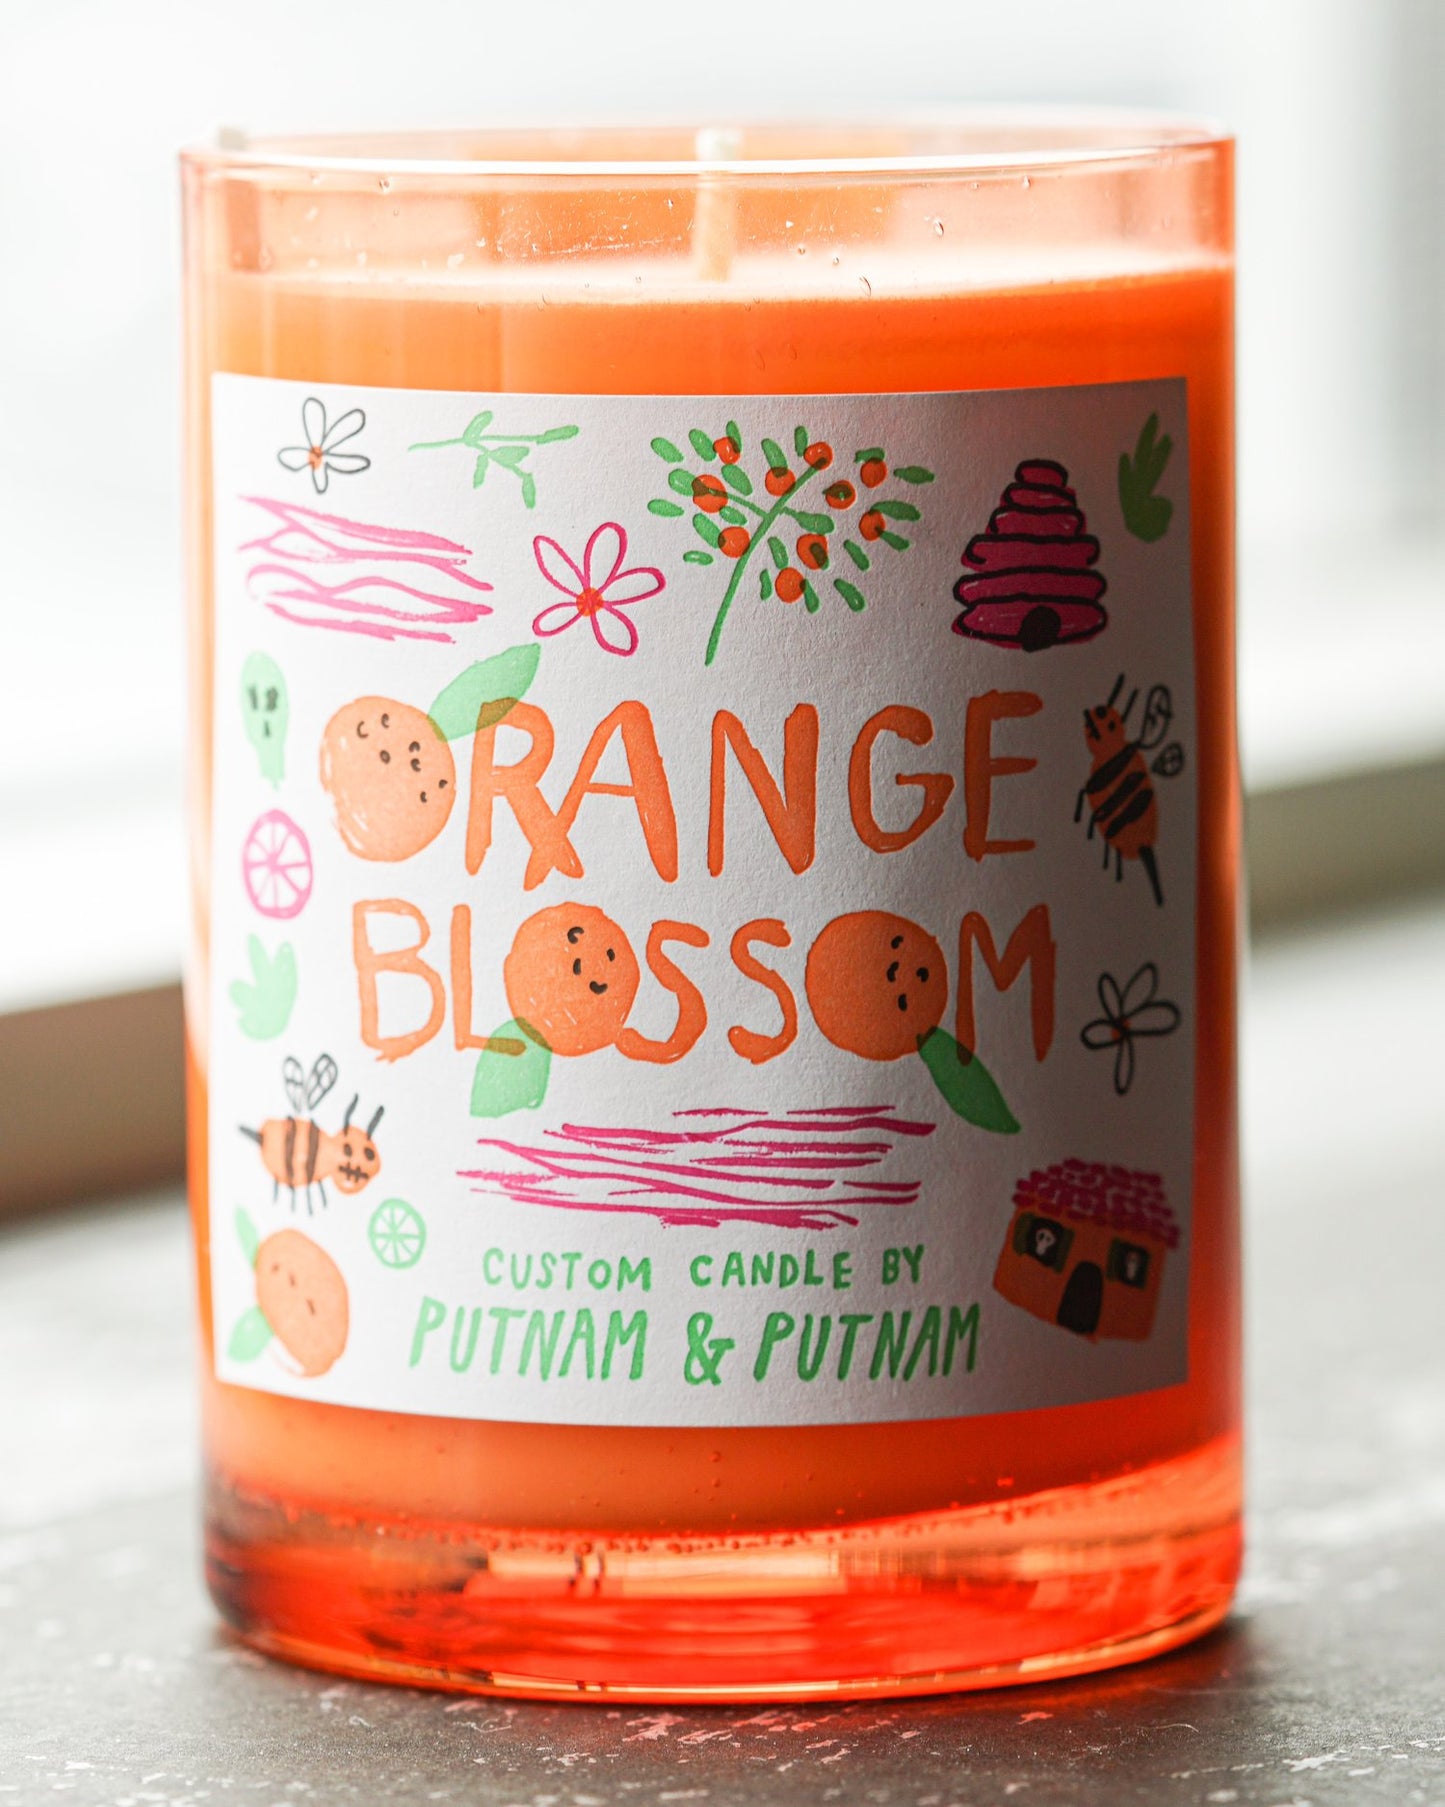 Putnam & Putnam Candle - Orange Blossom - The Crowd Went Wild